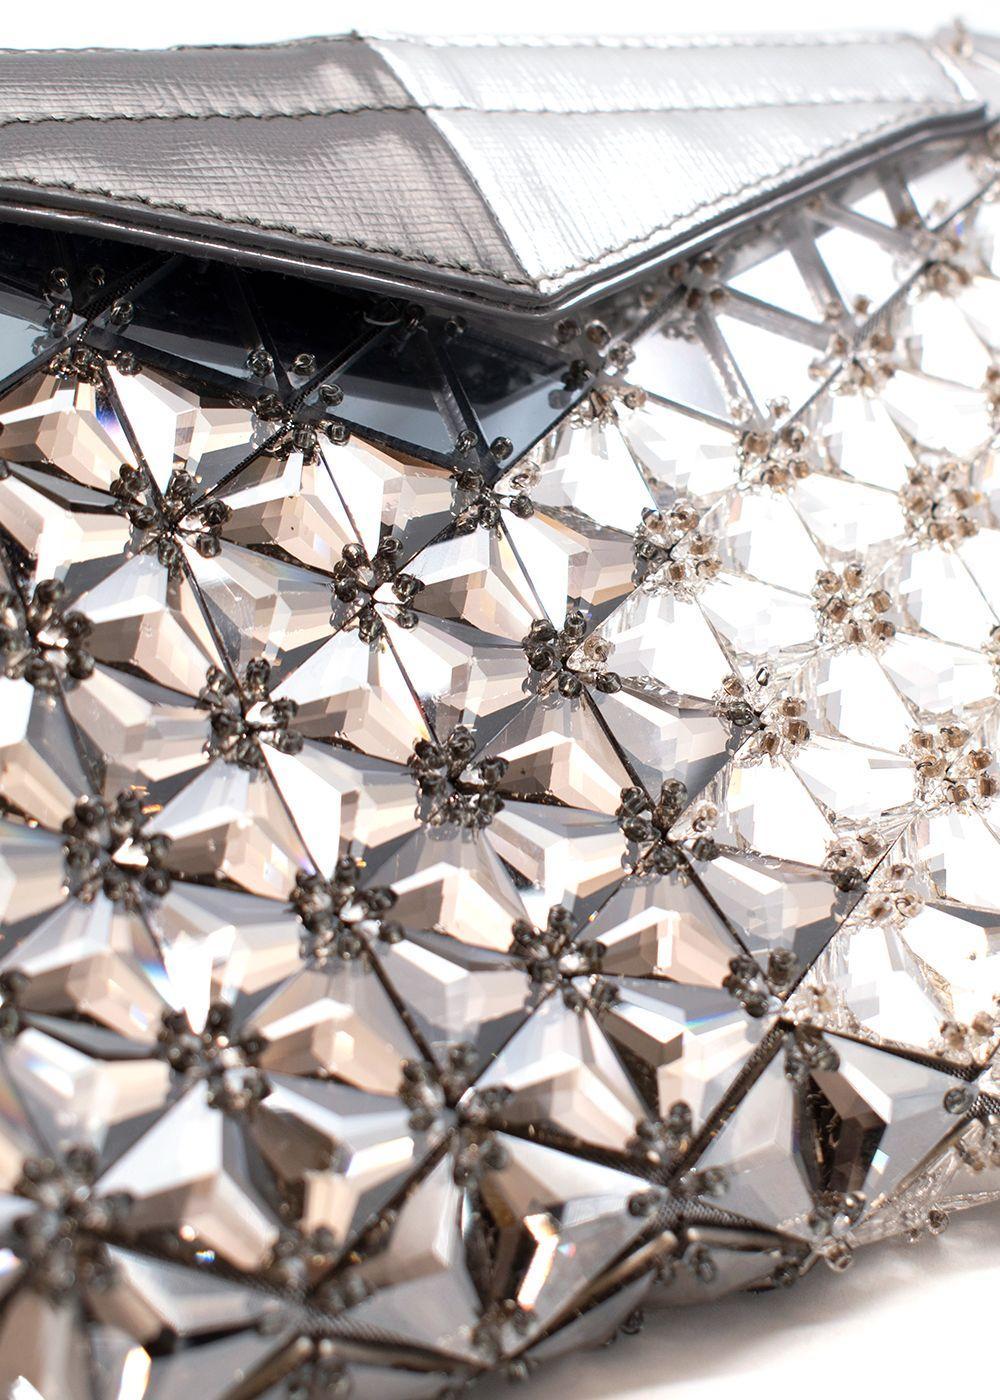 Black Fendi Mirrored Metallic Leather Clutch Bag For Sale